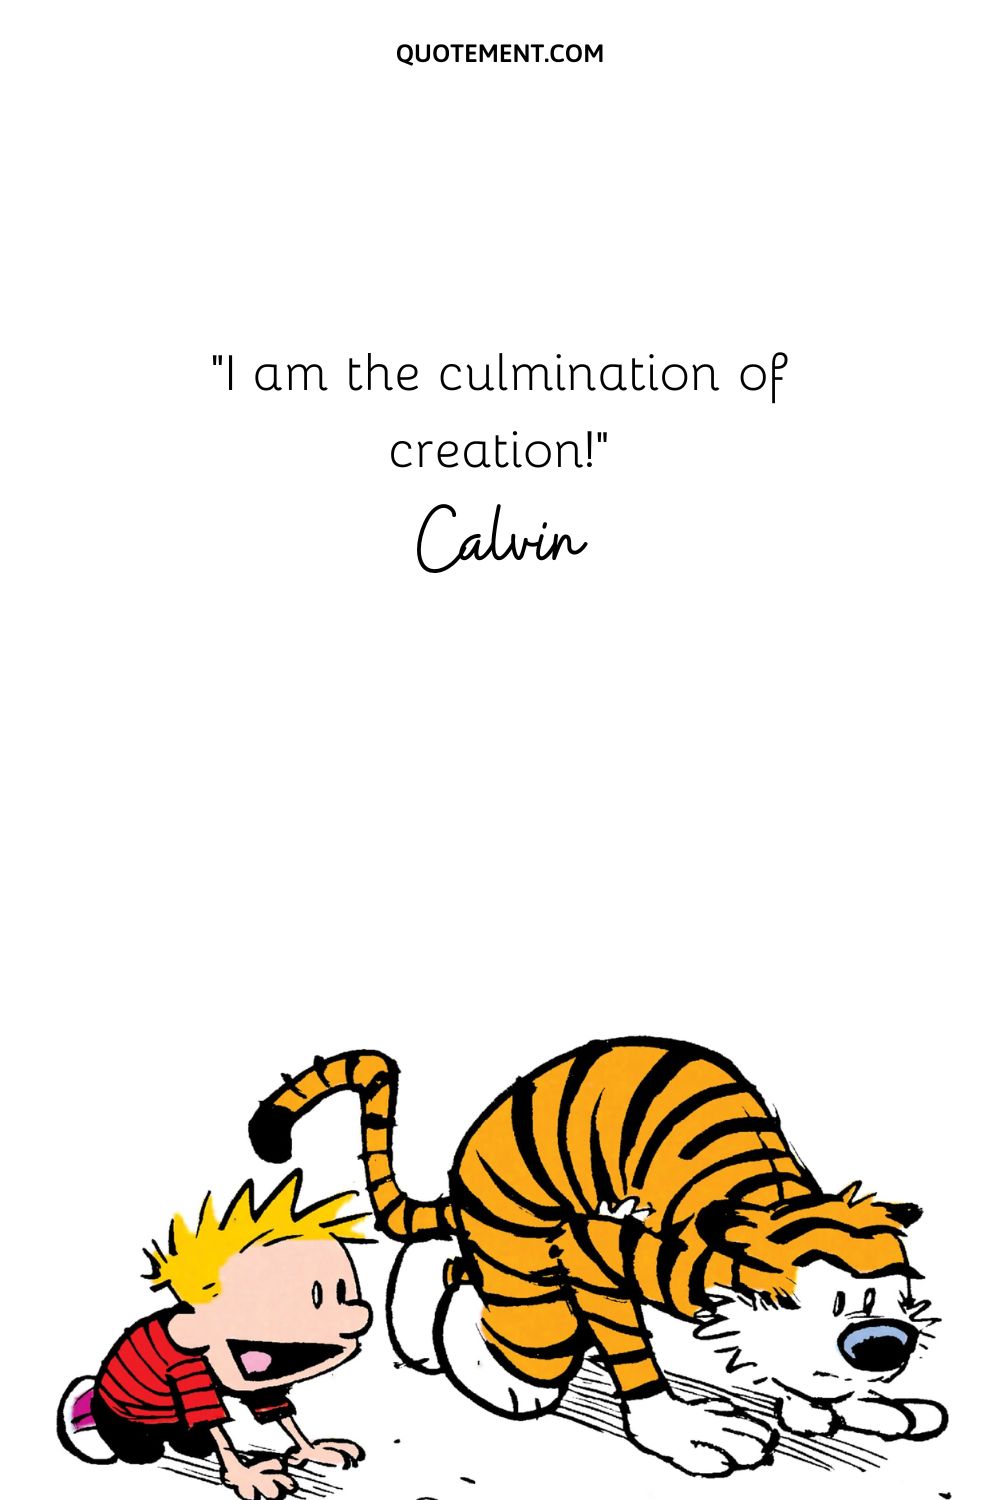 I am the culmination of creation